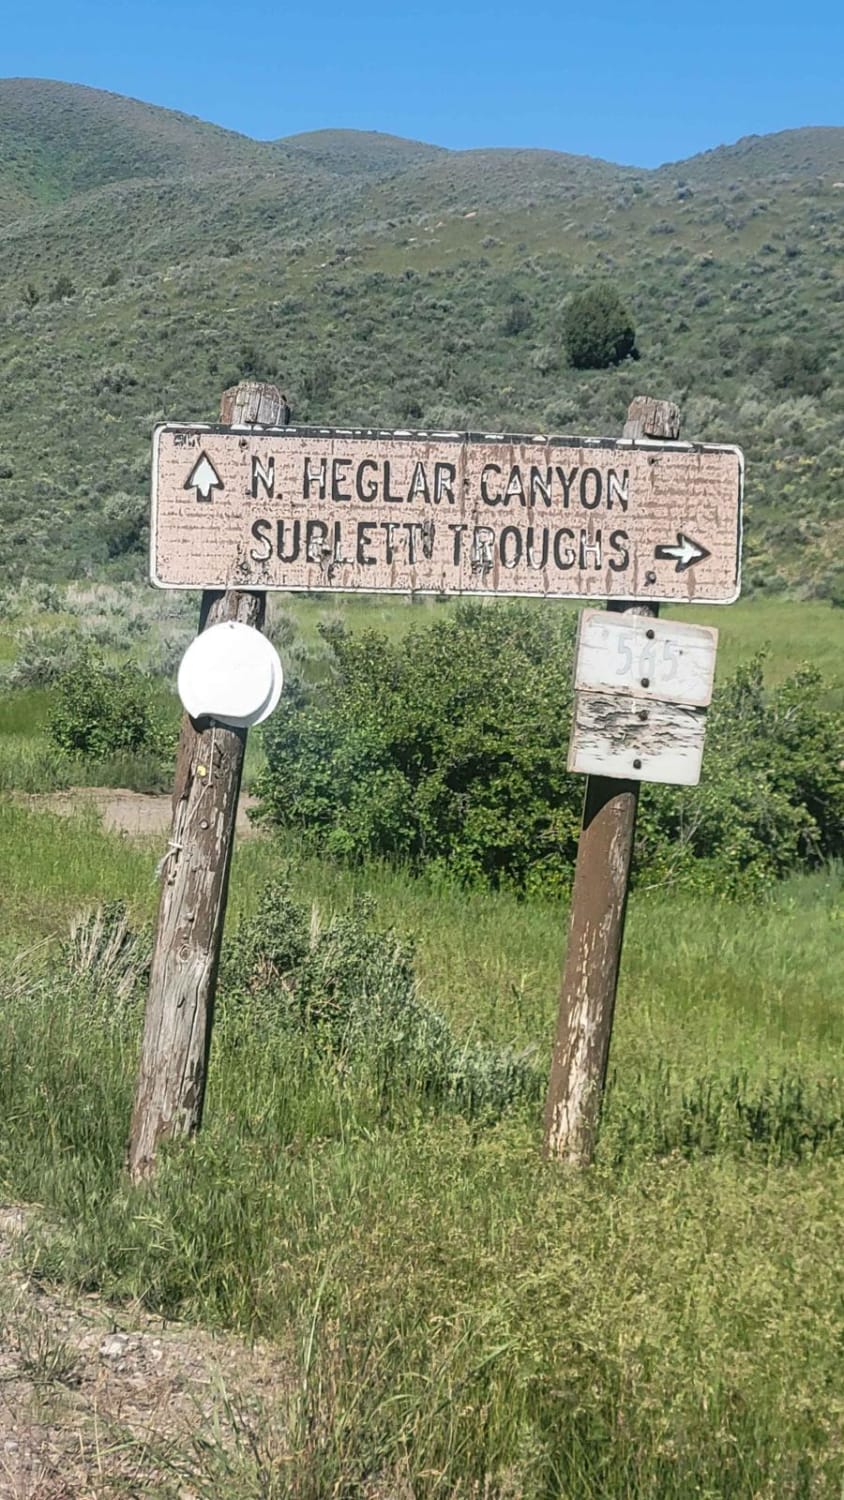 Heglar Canyon